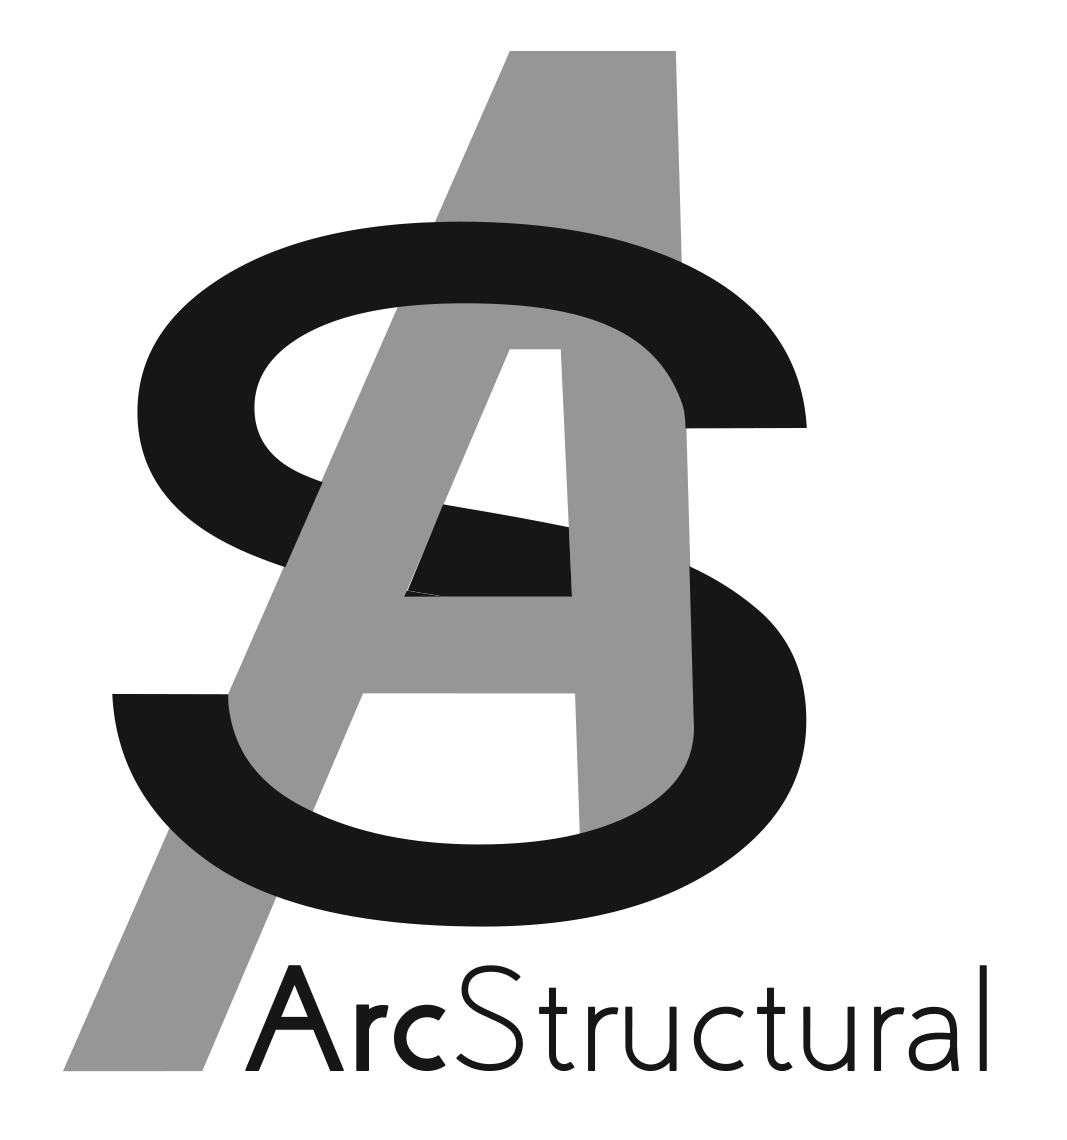 ArcStructural